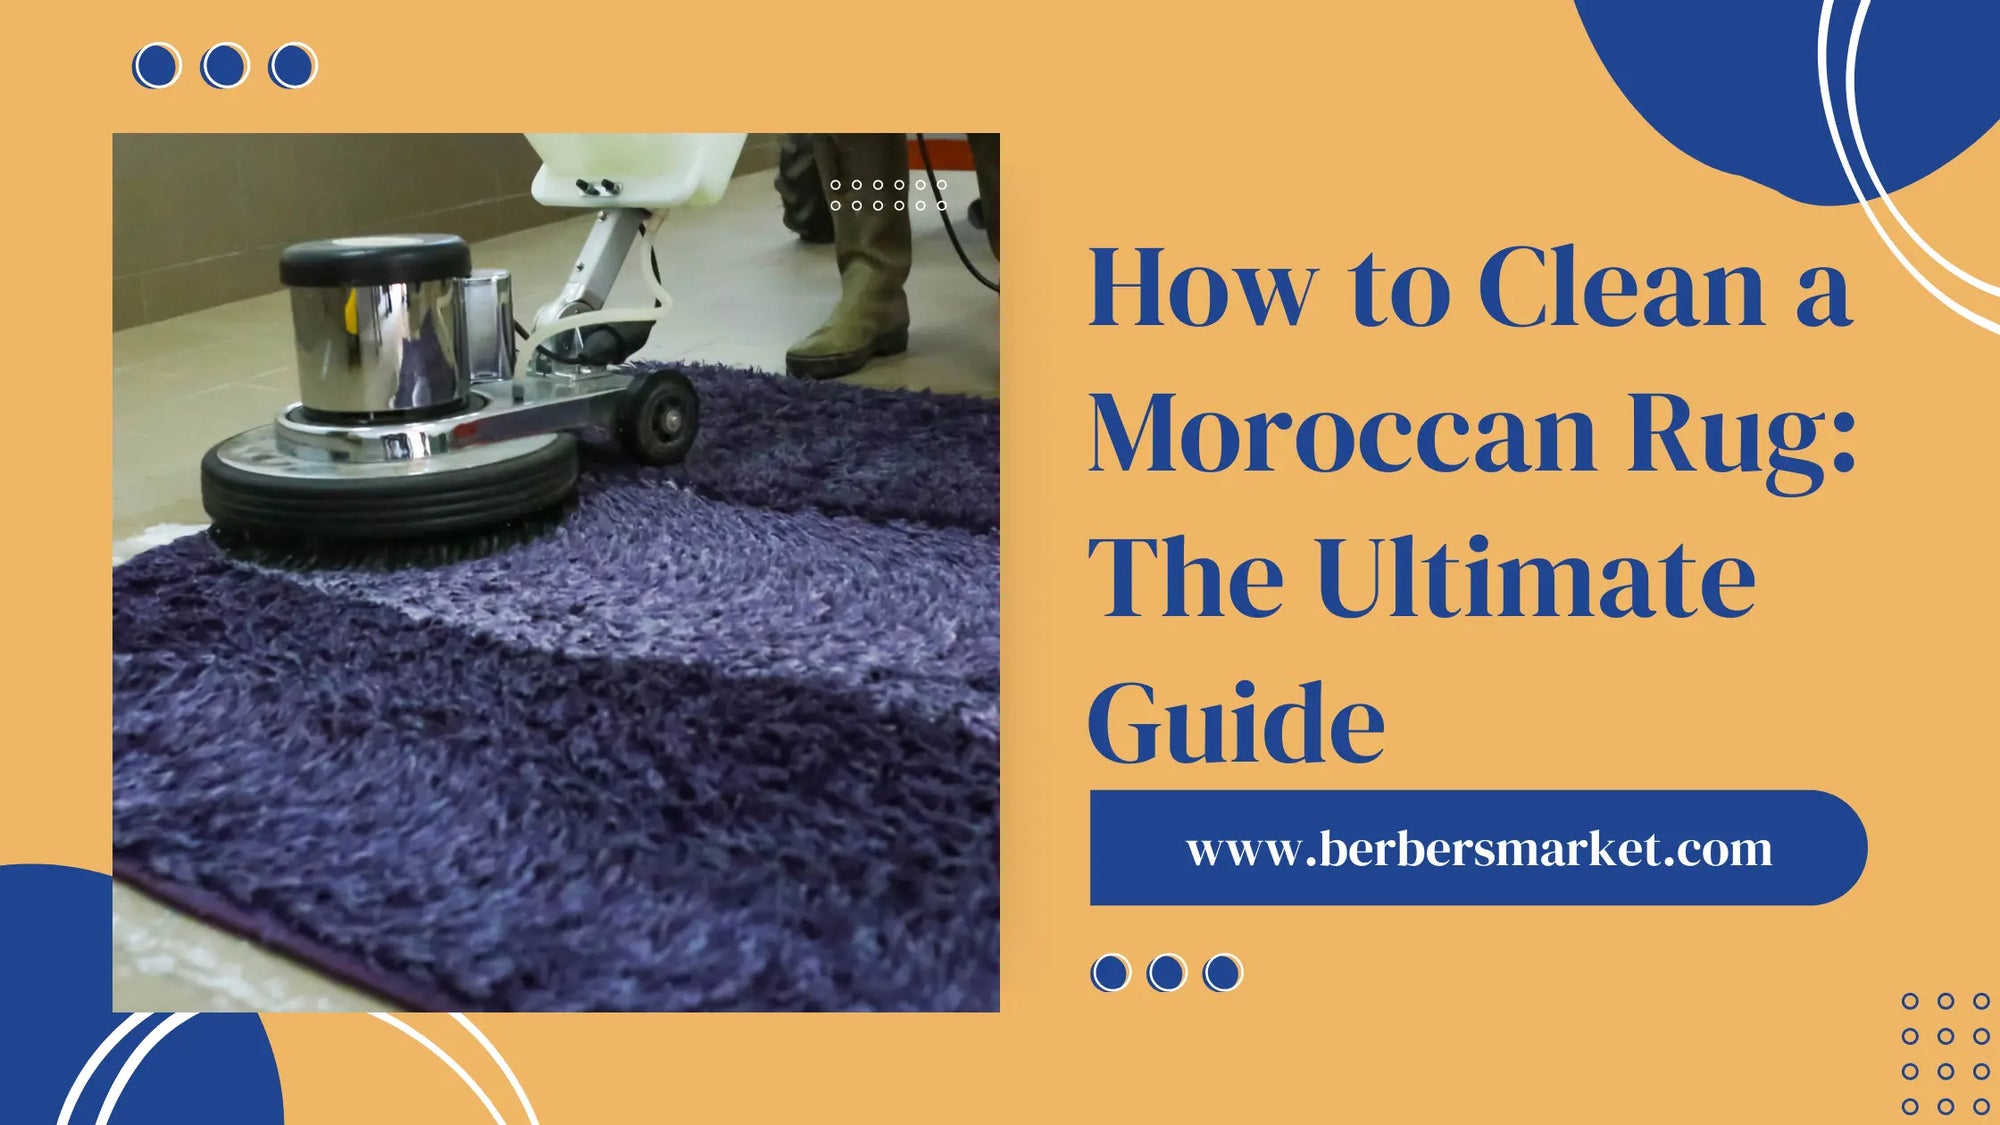 Handmade Moroccan rugs encyclopedia blog posts banner for desktop